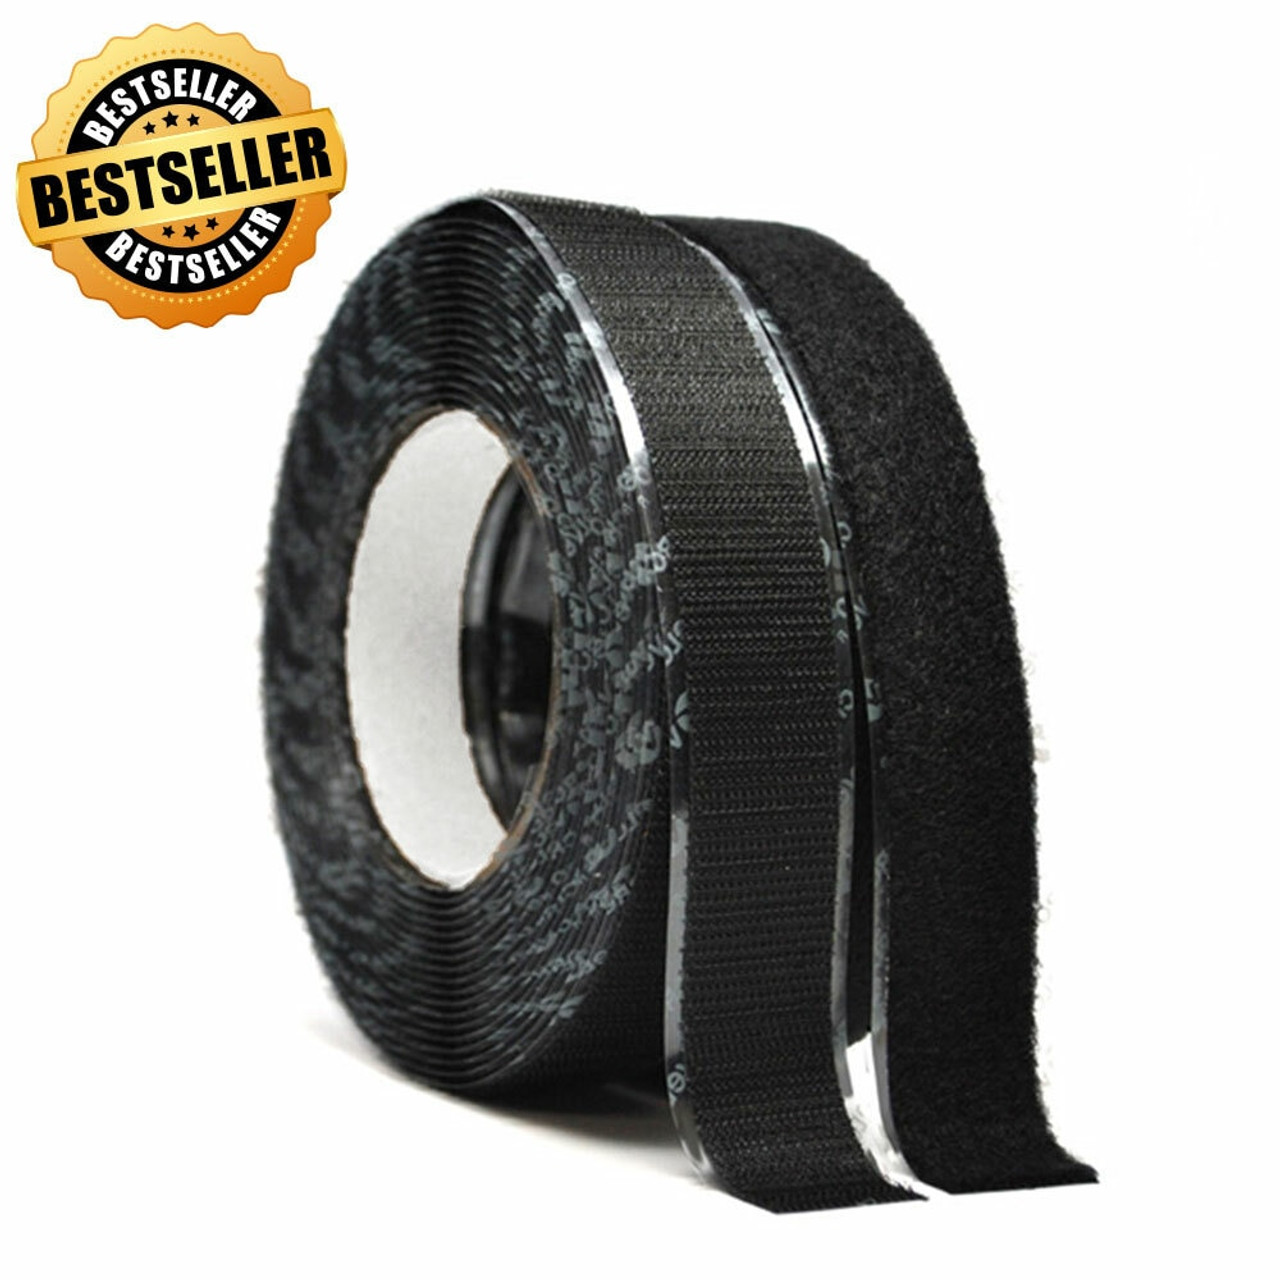 Velcro Brand Industrial Strength, 15' x 2 Tape, Black